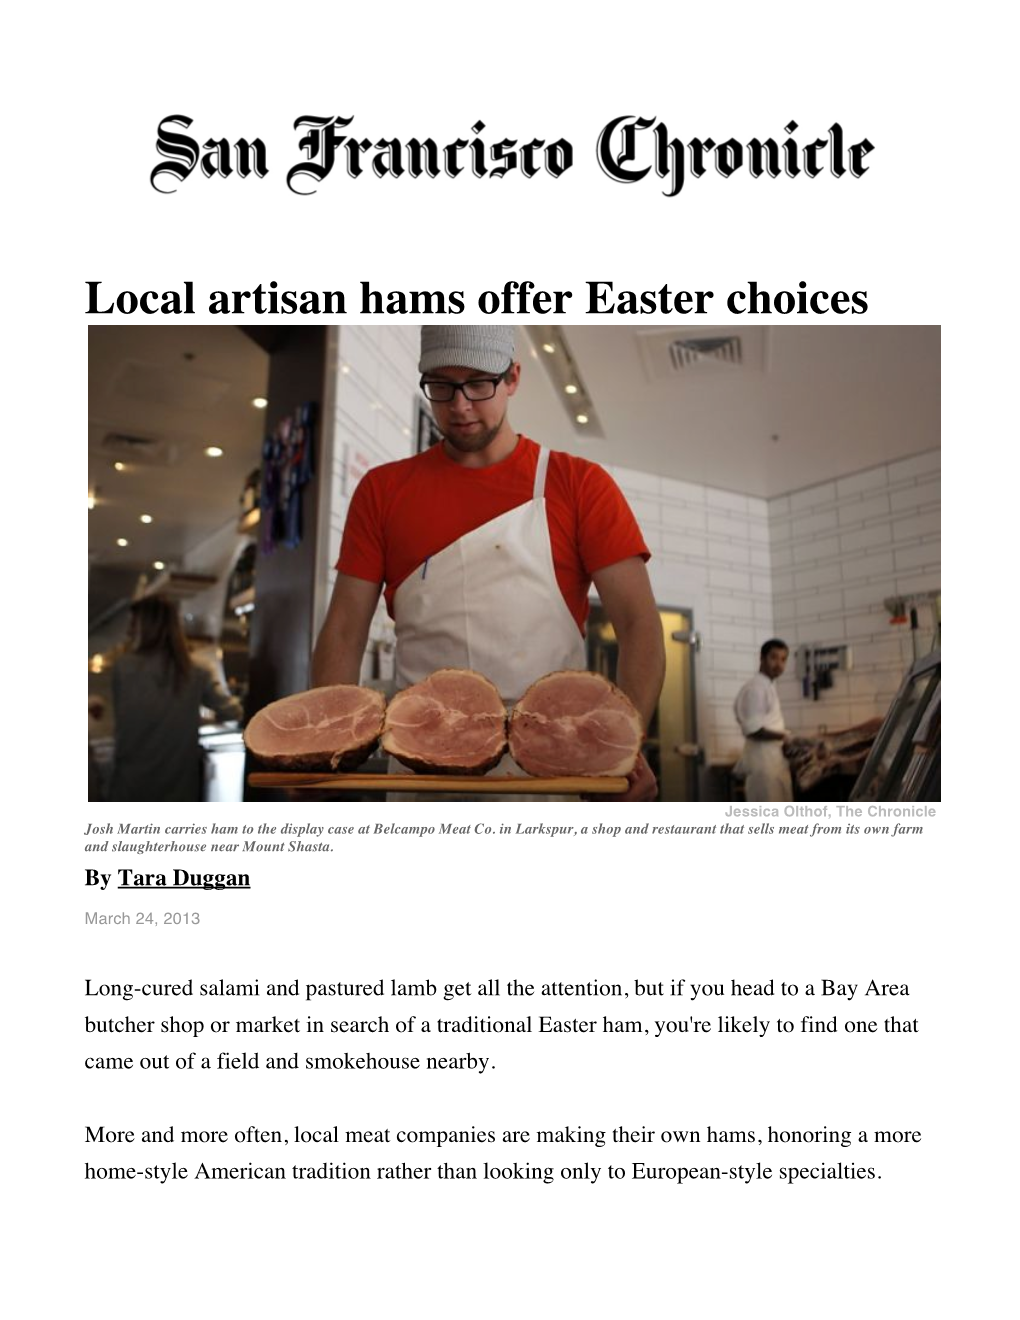 Local Artisan Hams Offer Easter Choices